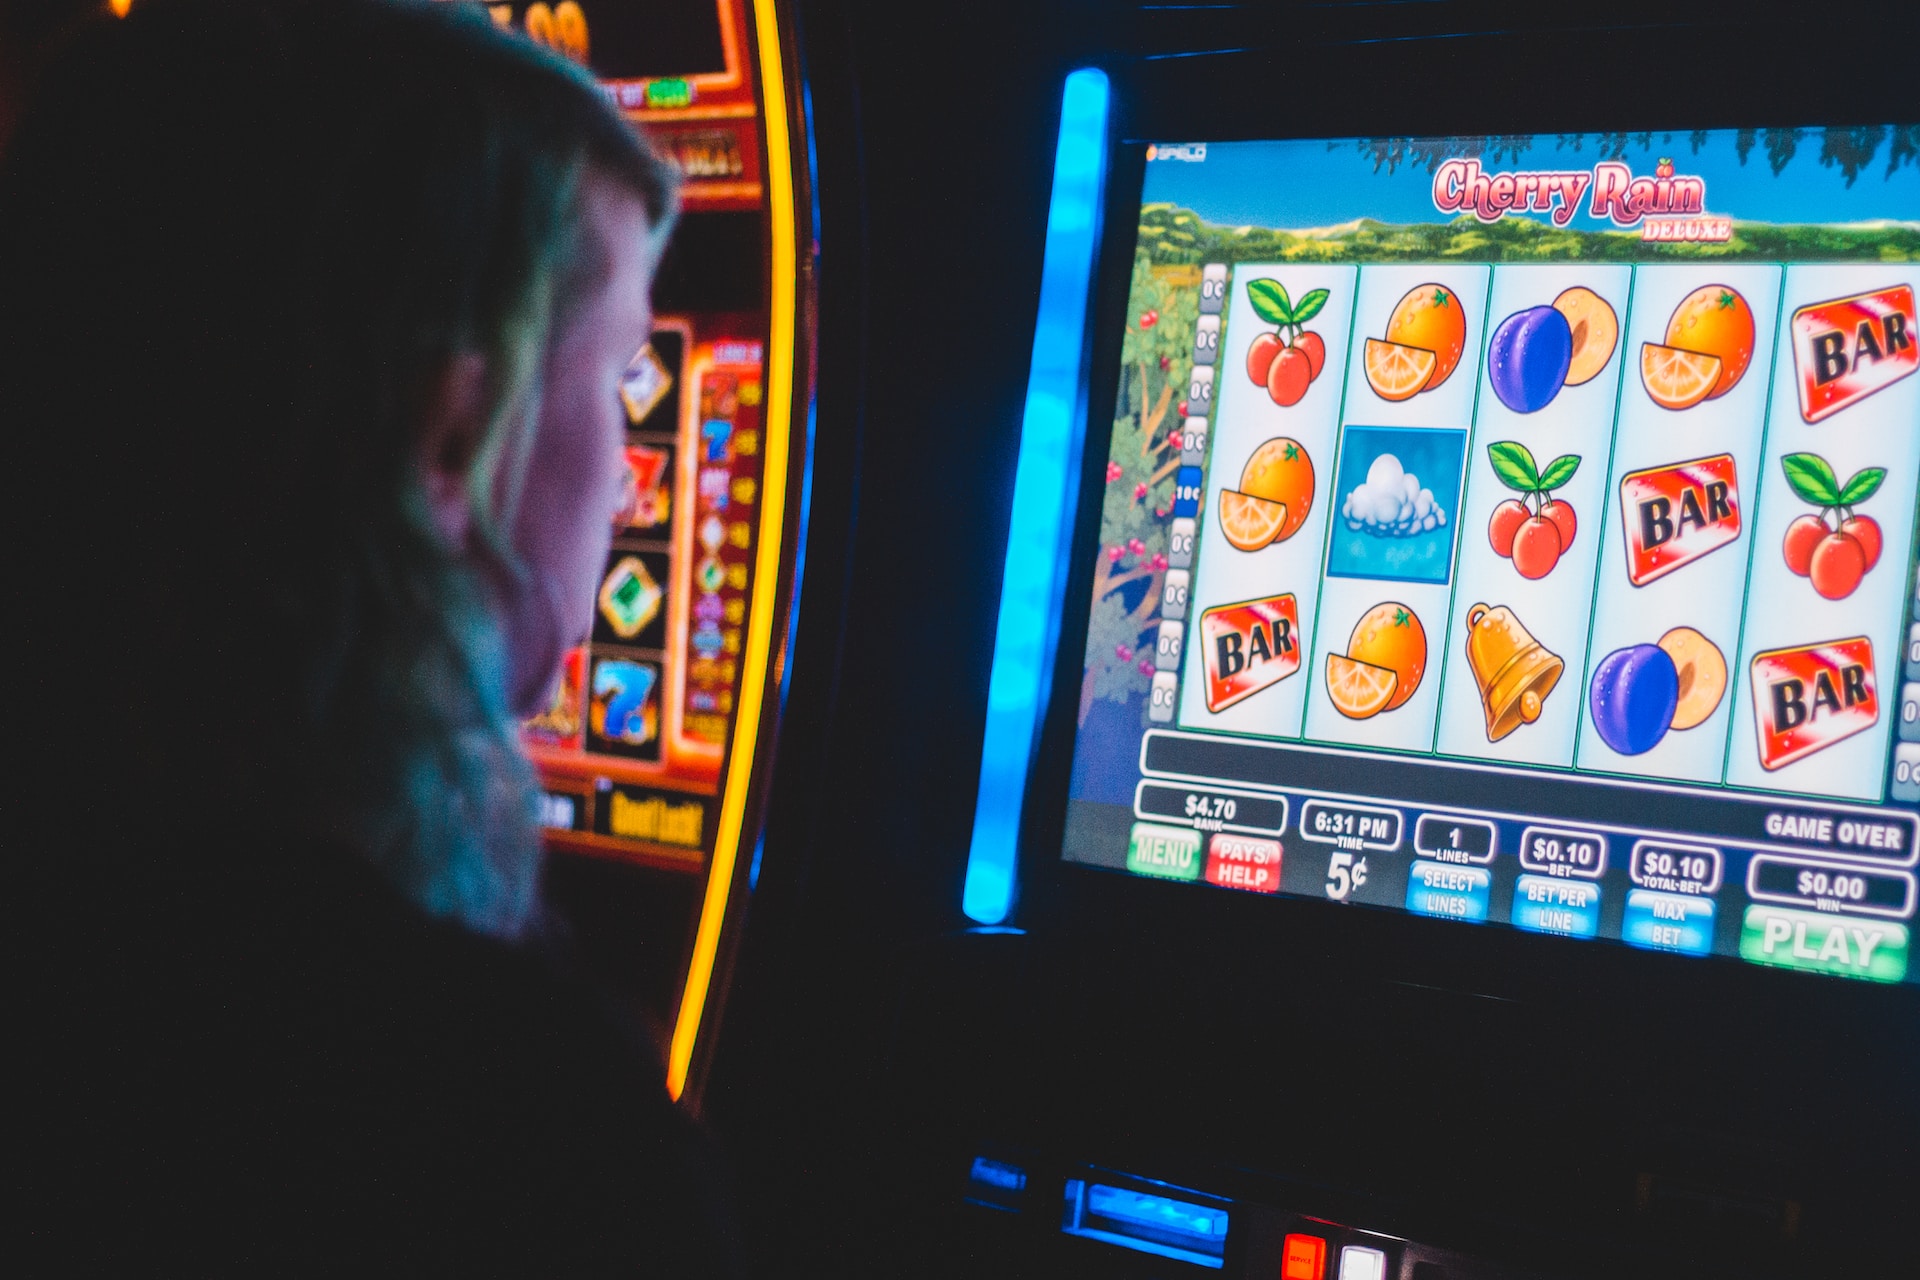 causes Gambling Addiction